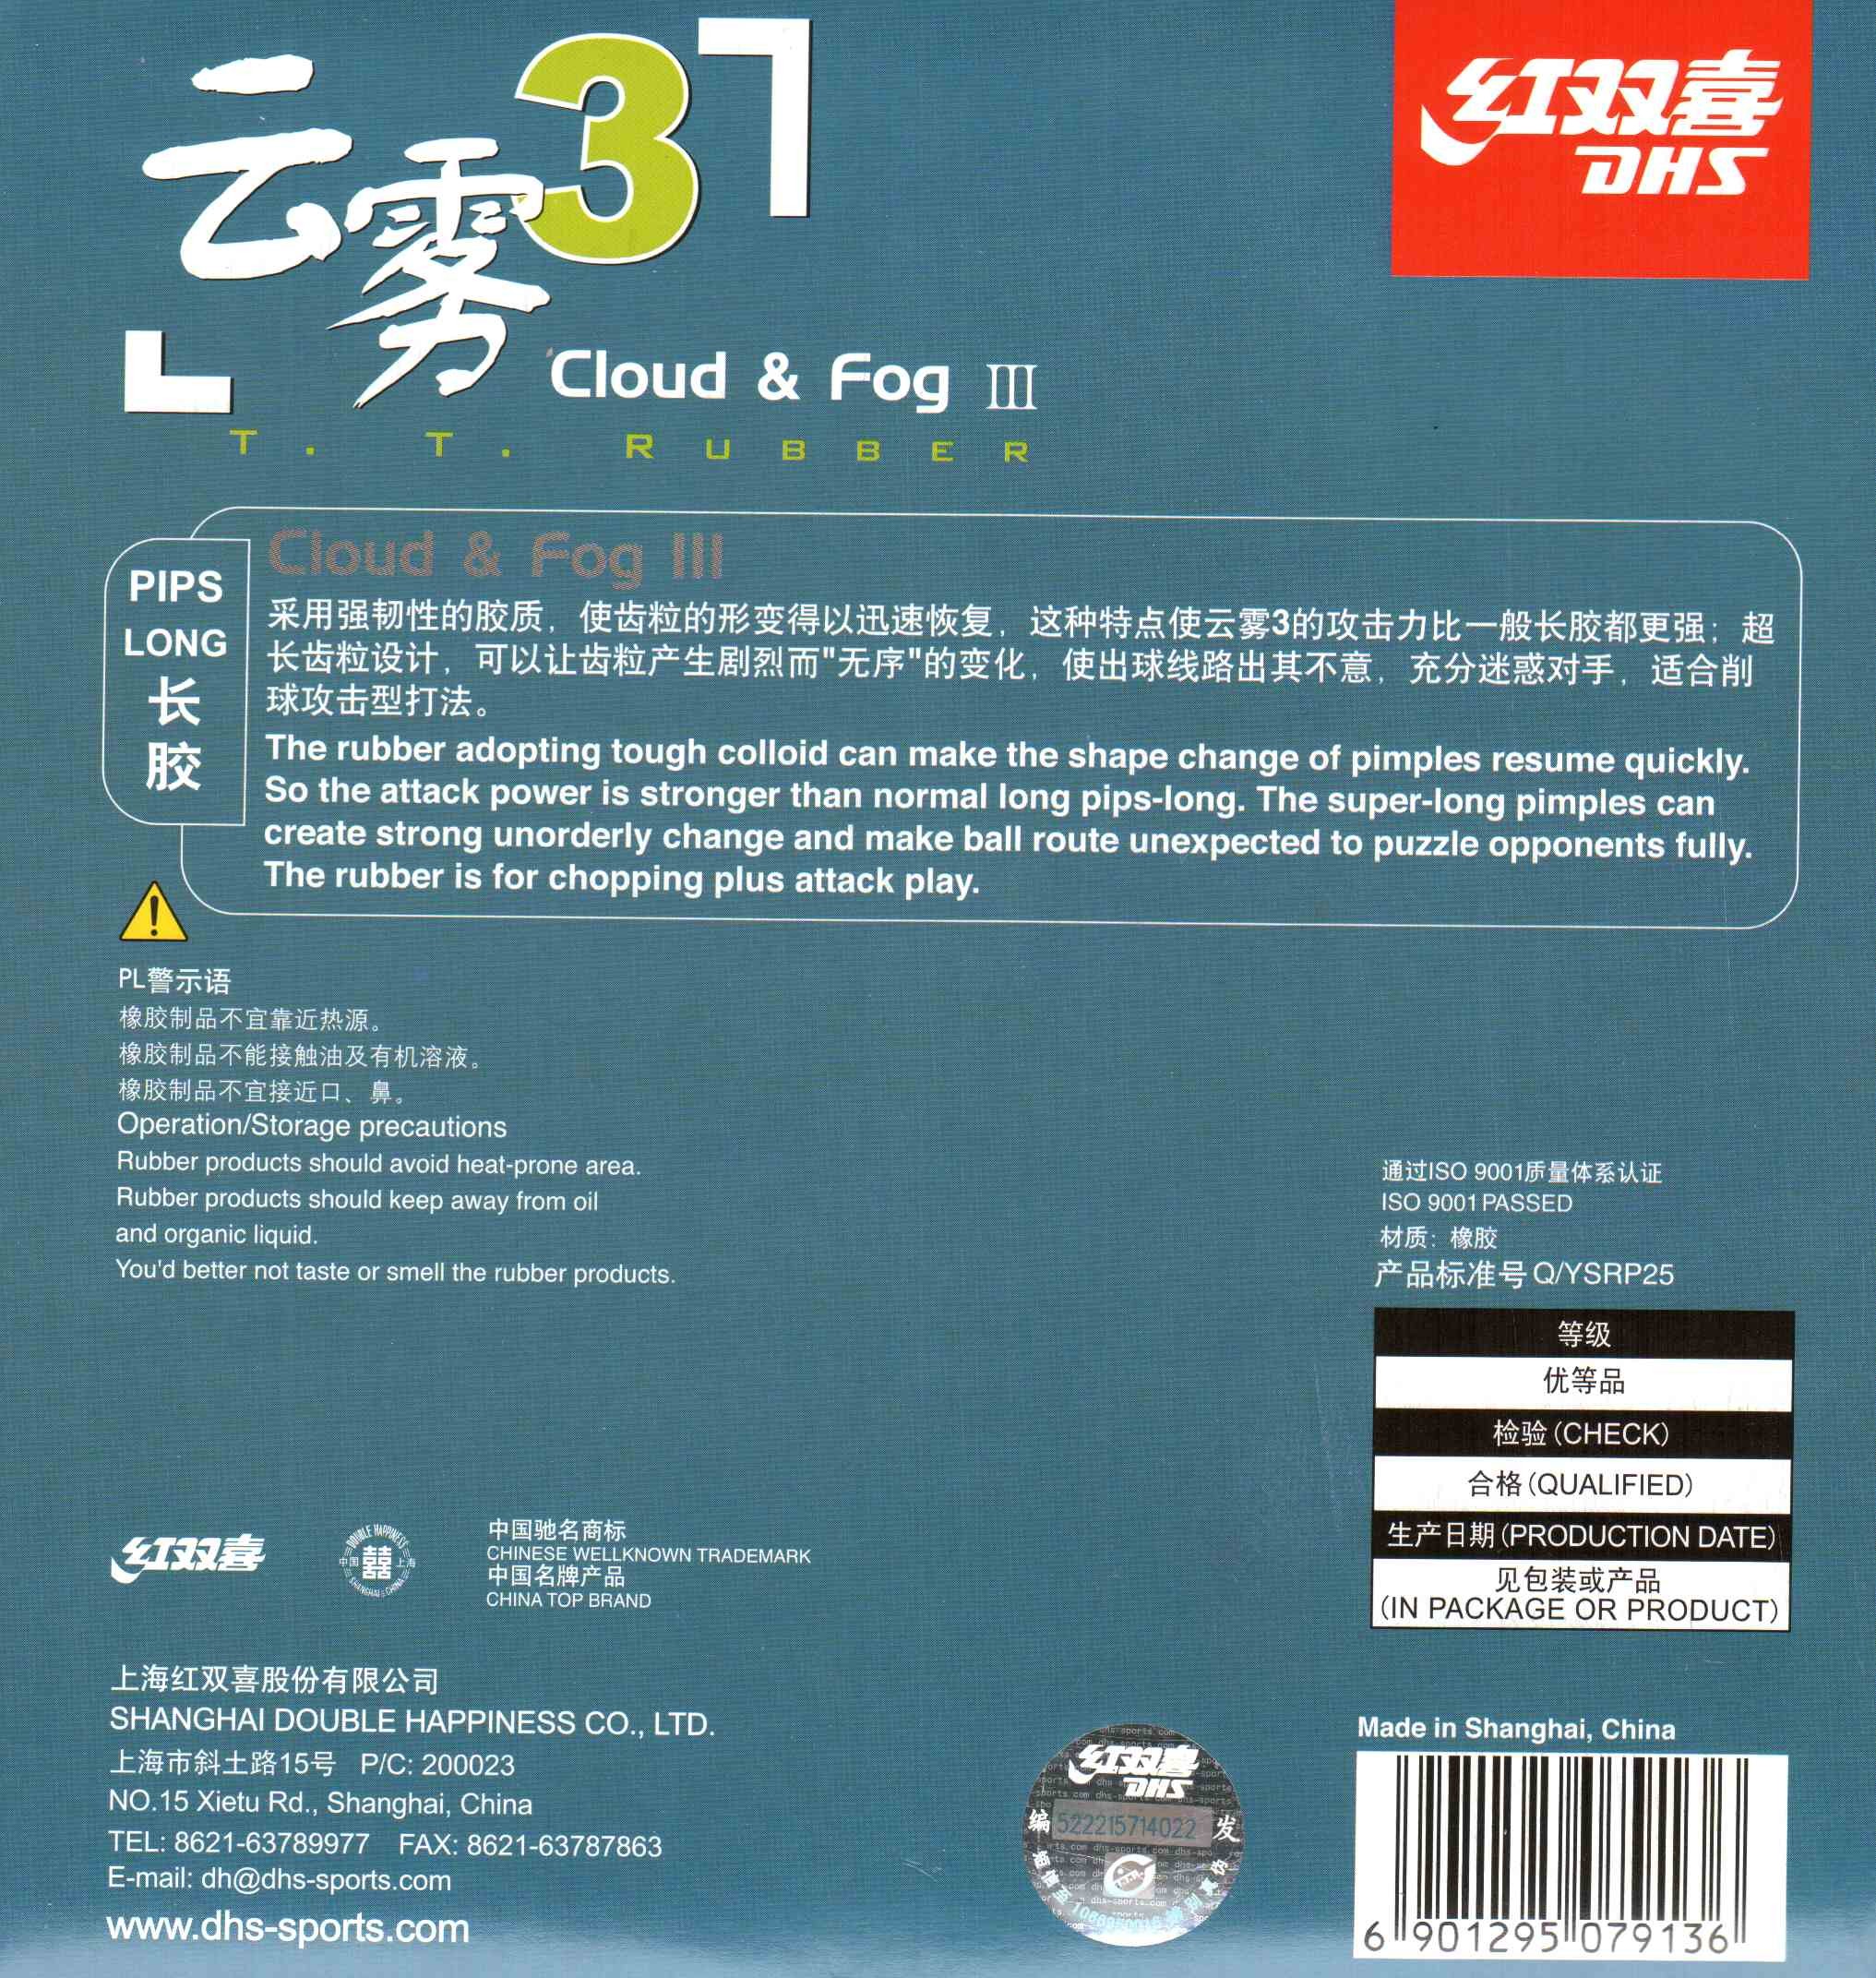 DHS Cloud&Fog 3 Table Tennis Long pips Rubber Sponge New USD Genuine 